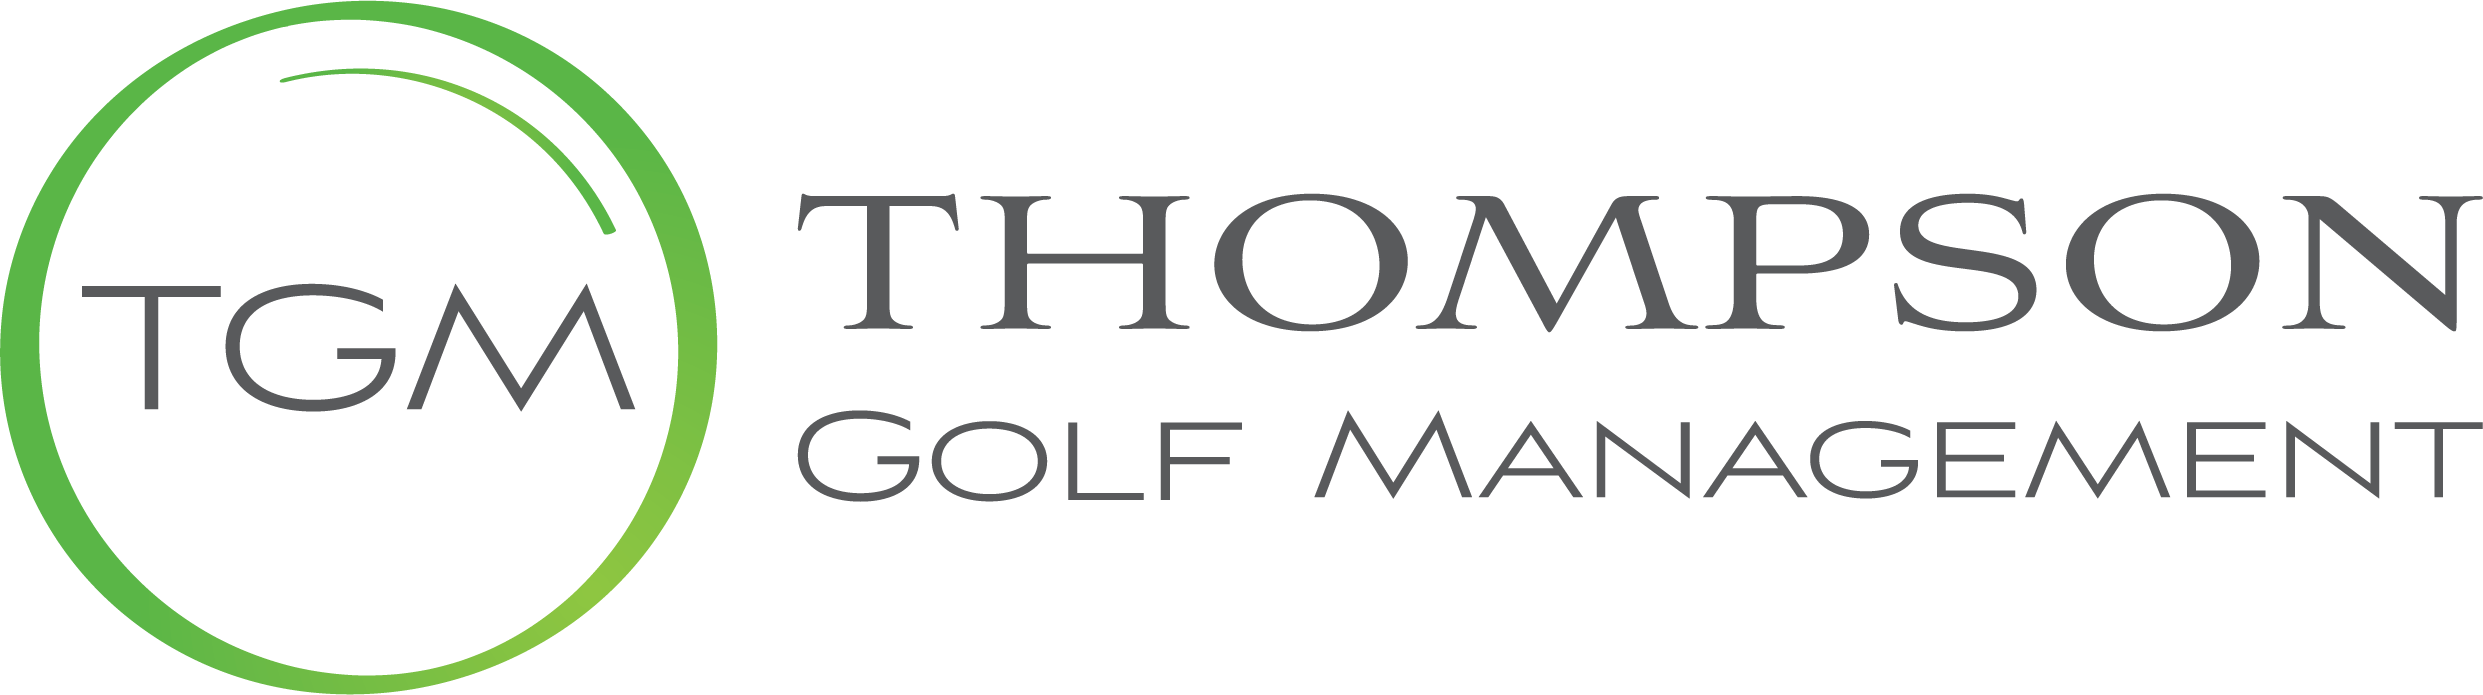 Thompson Golf Management Logo